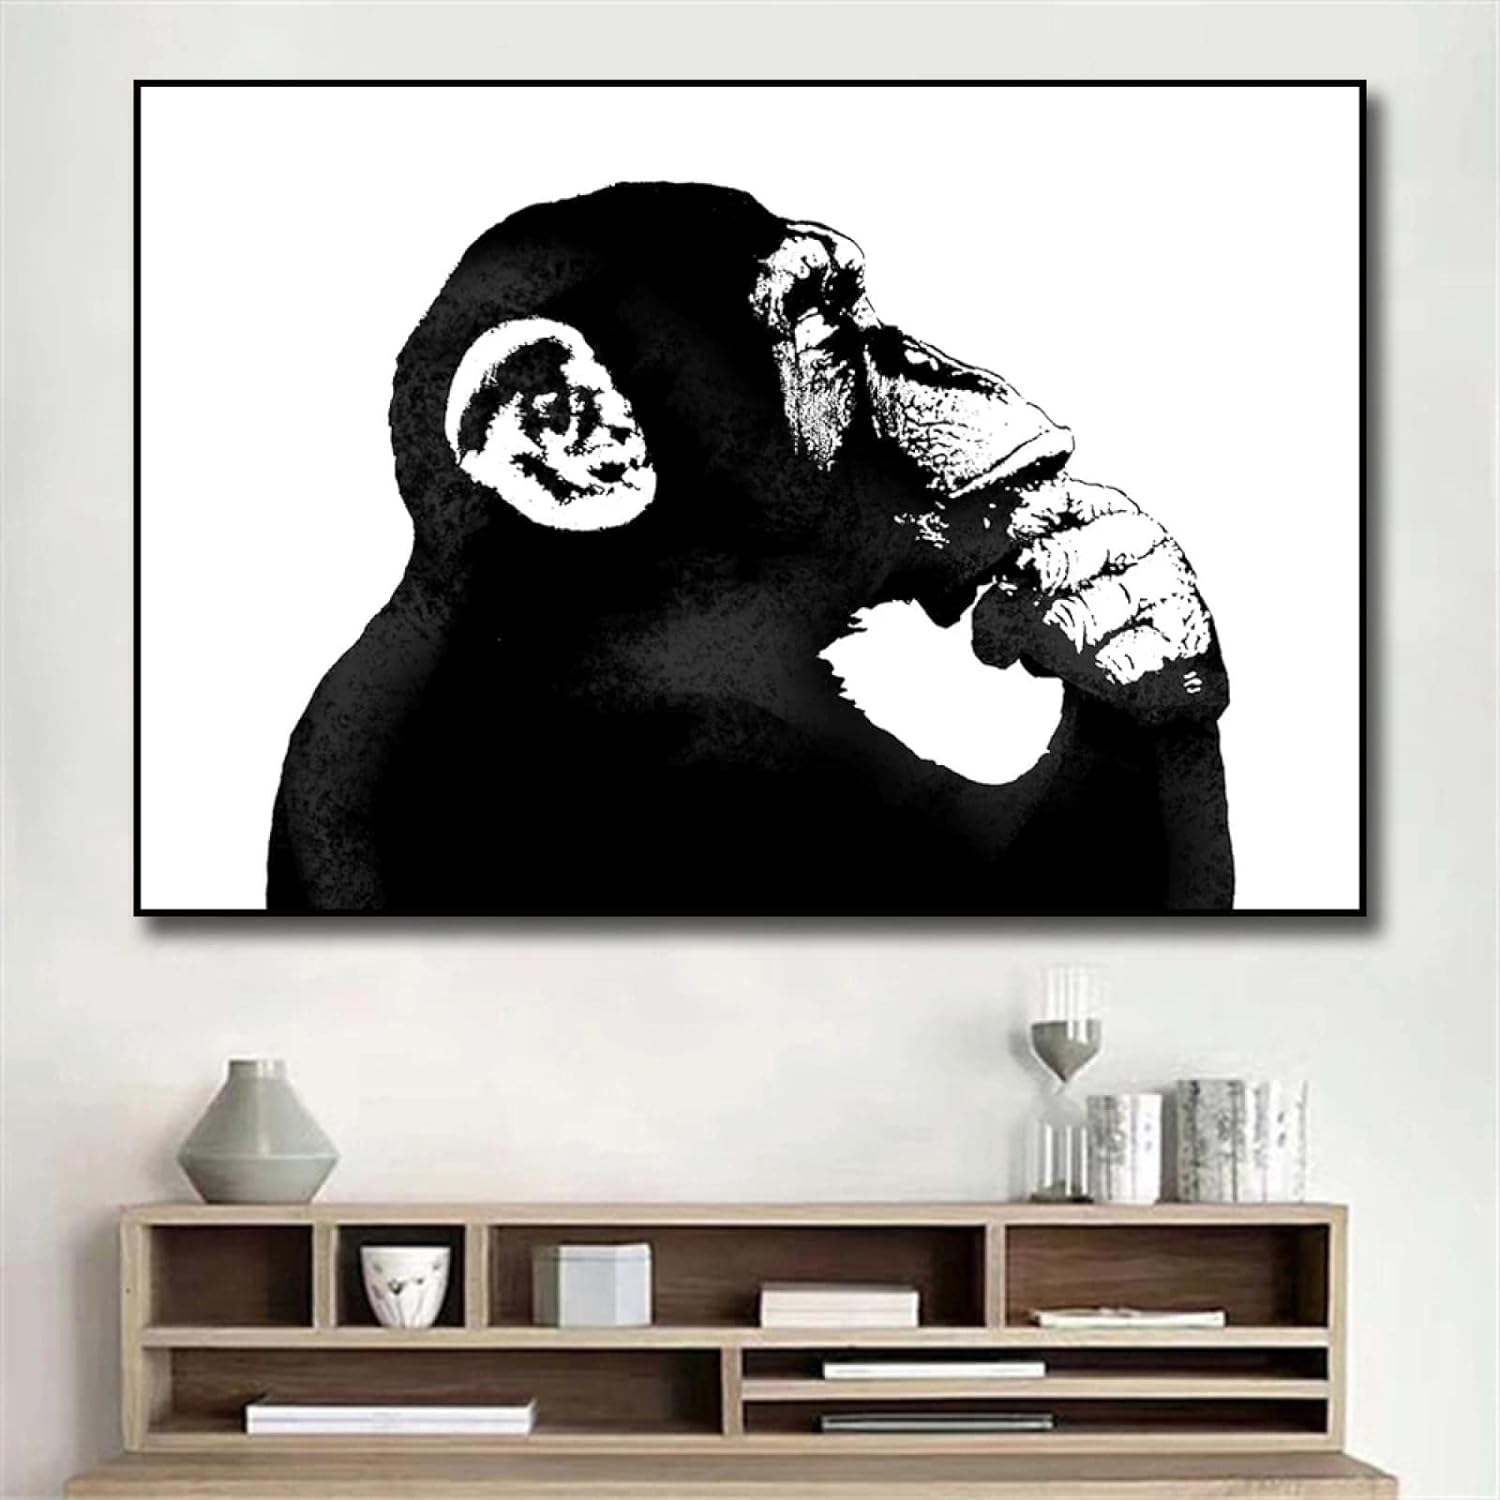 Thought-Provoking: Banksy Monkey Thinker